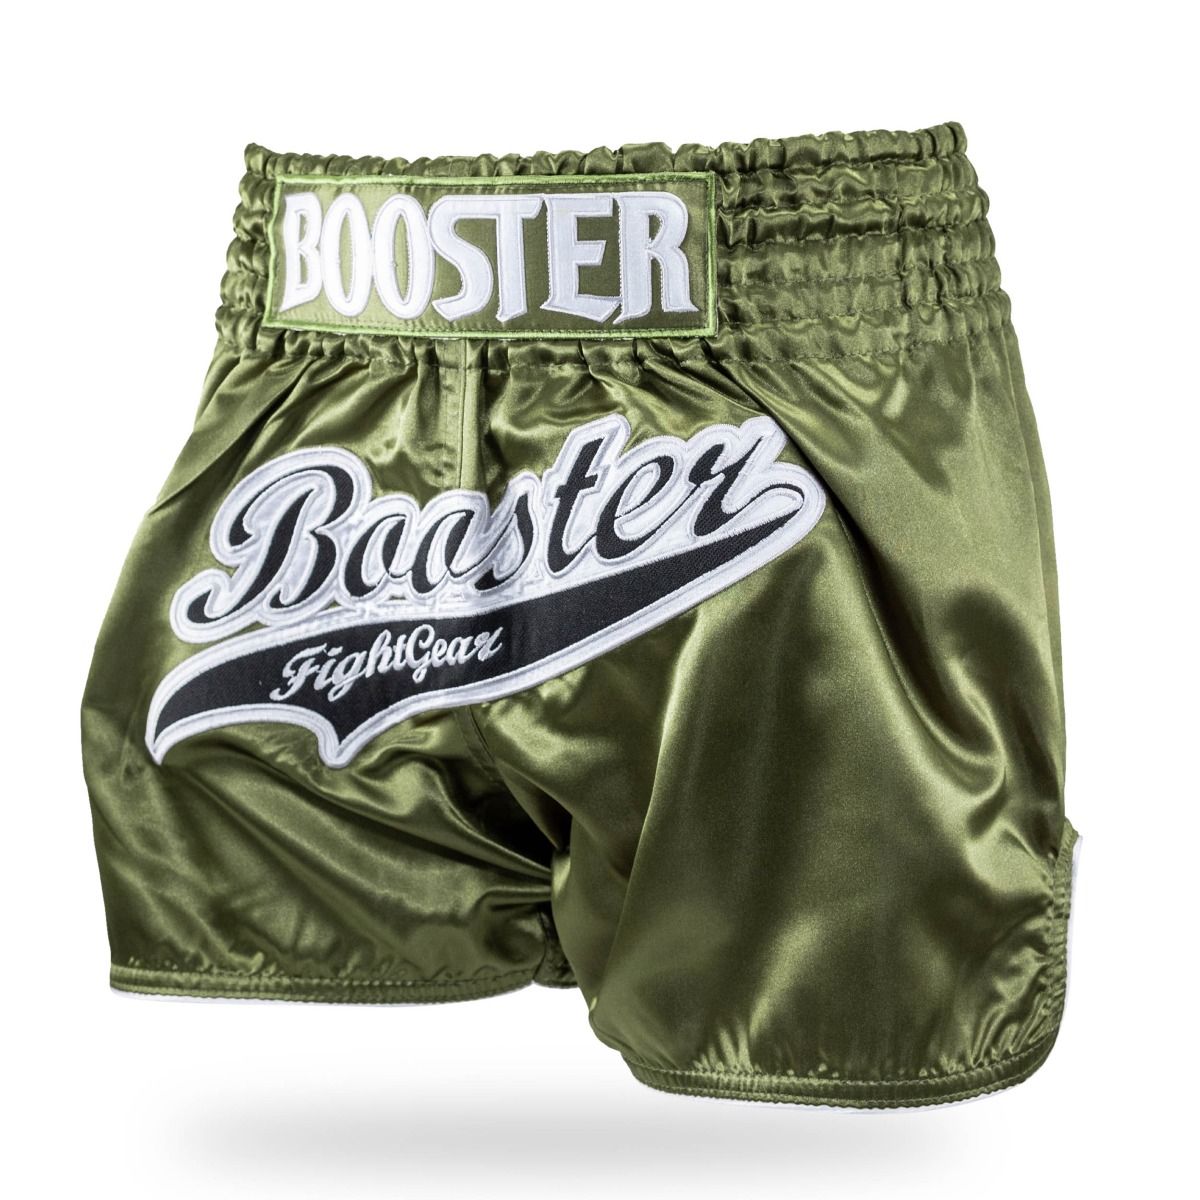 Booster Fightgear - fightshort - TBT SLUGGER - groen - licht groen